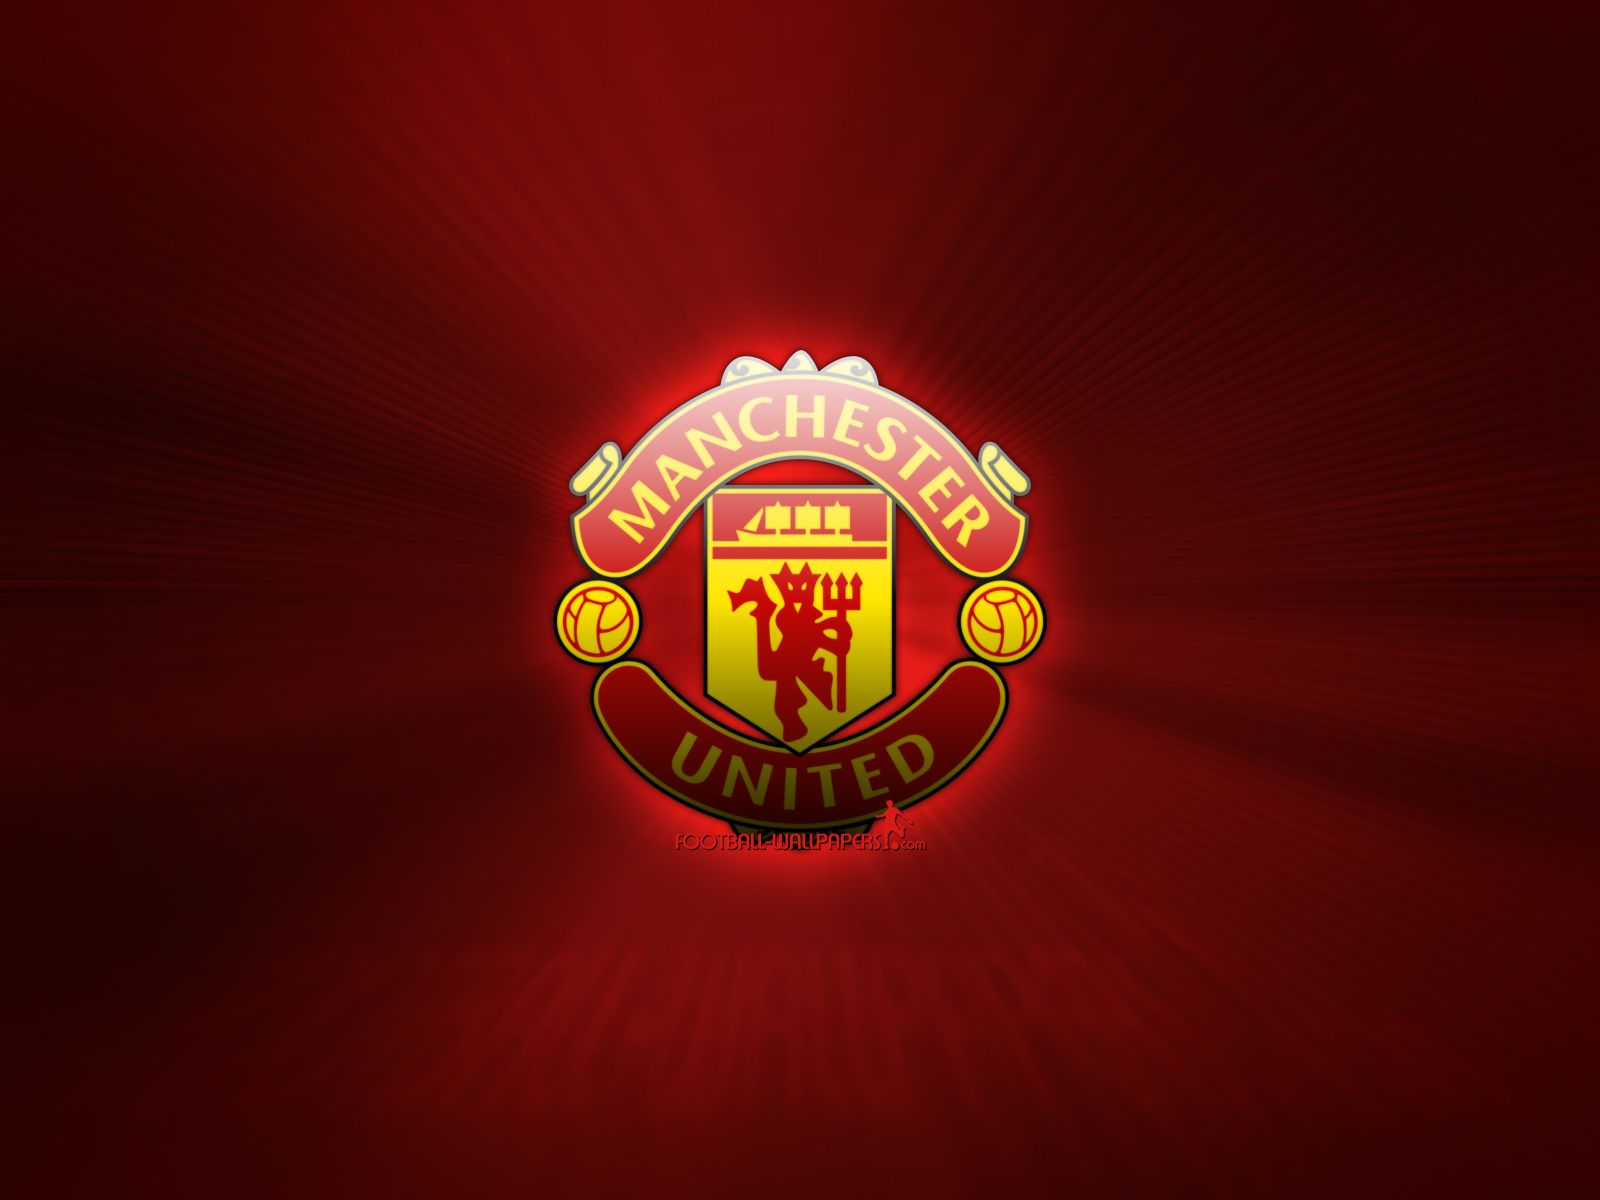 Go Man U. Manchester united logo, Manchester united wallpaper, Manchester united